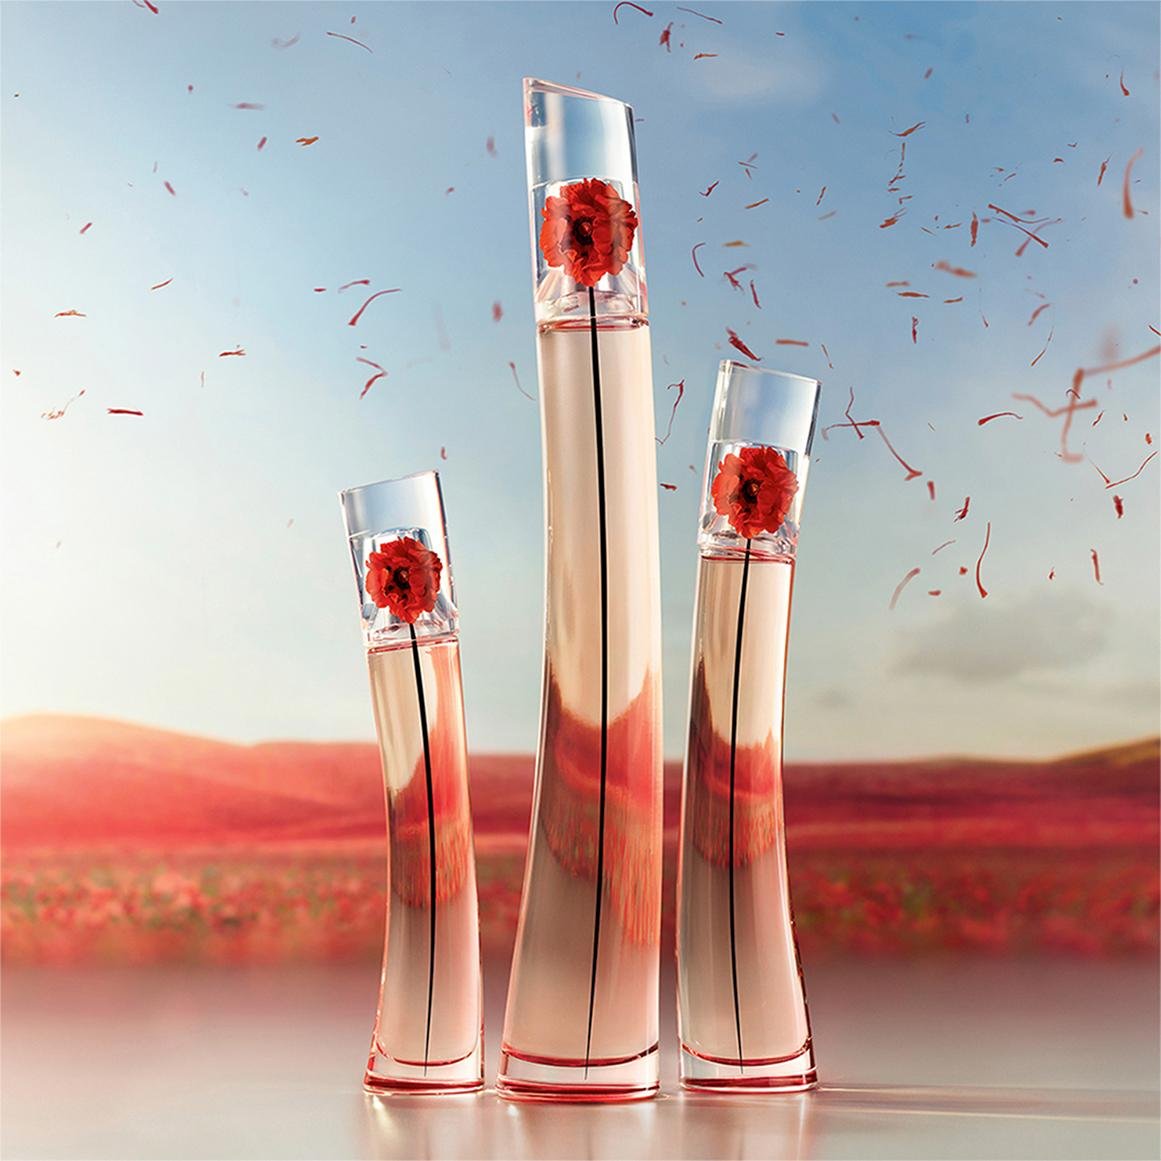 Kenzo Flower EDP Body Milk Set | My Perfume Shop Australia